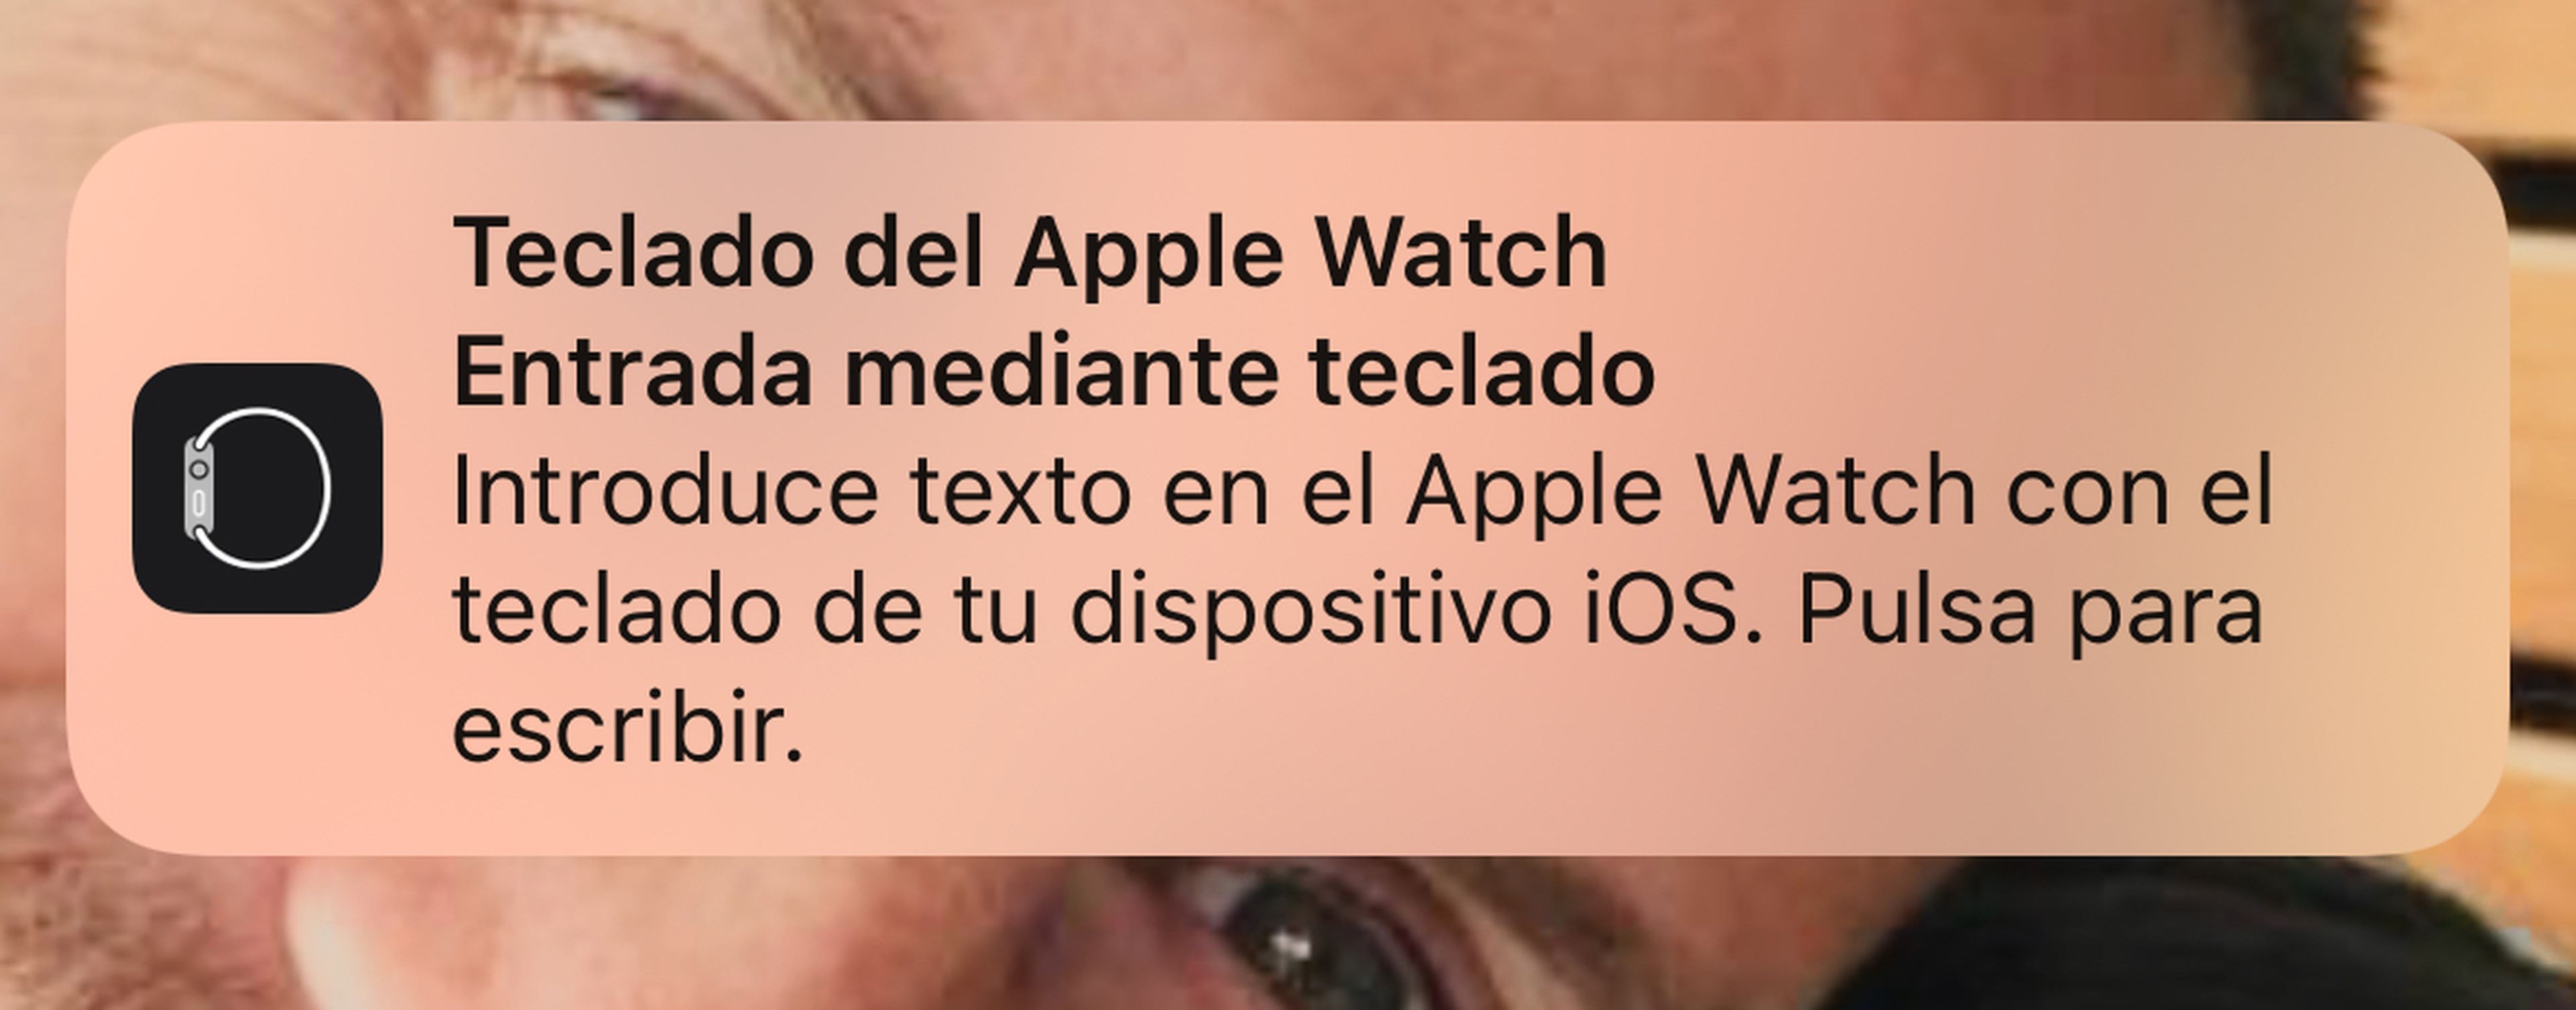 Entrada texto Apple Watch